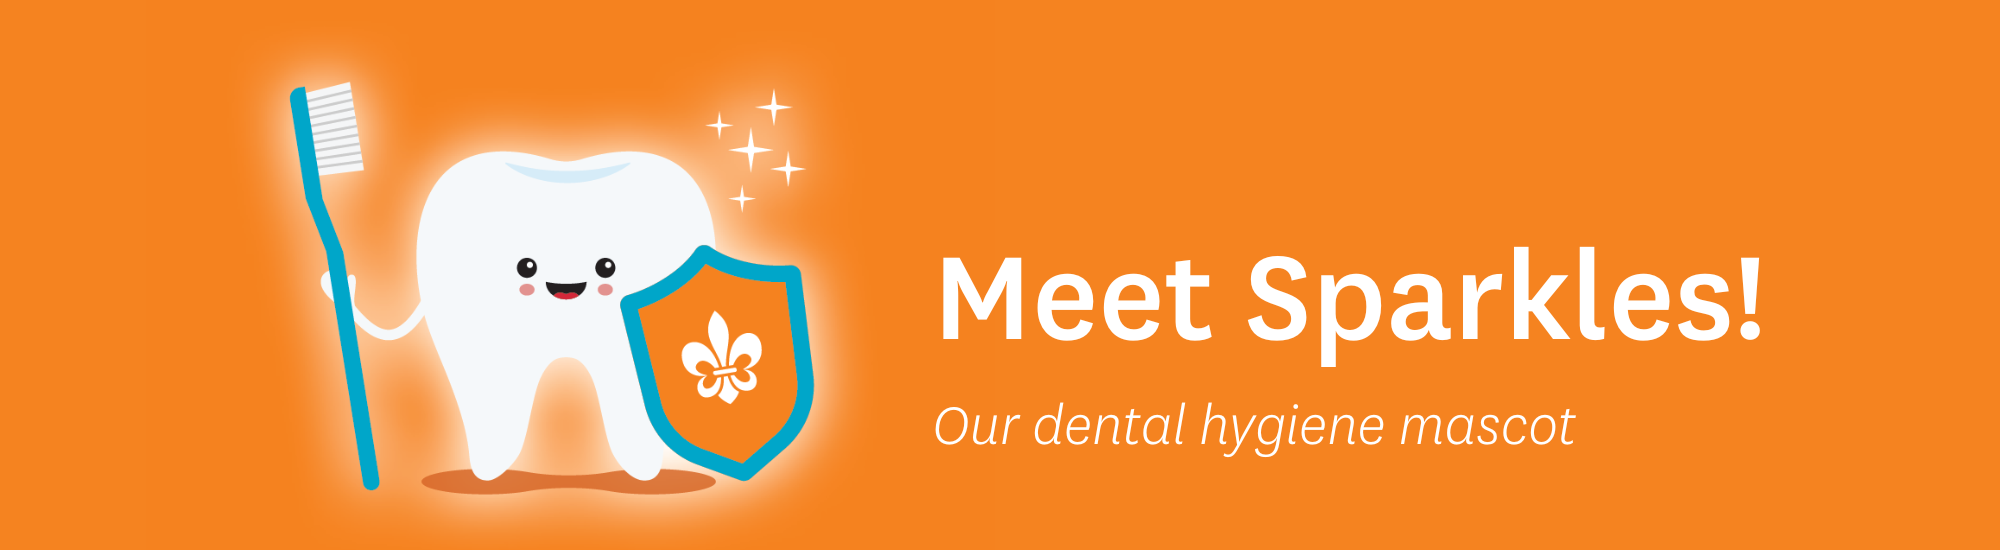 Meet Sparkles! Our dental hygiene mascot